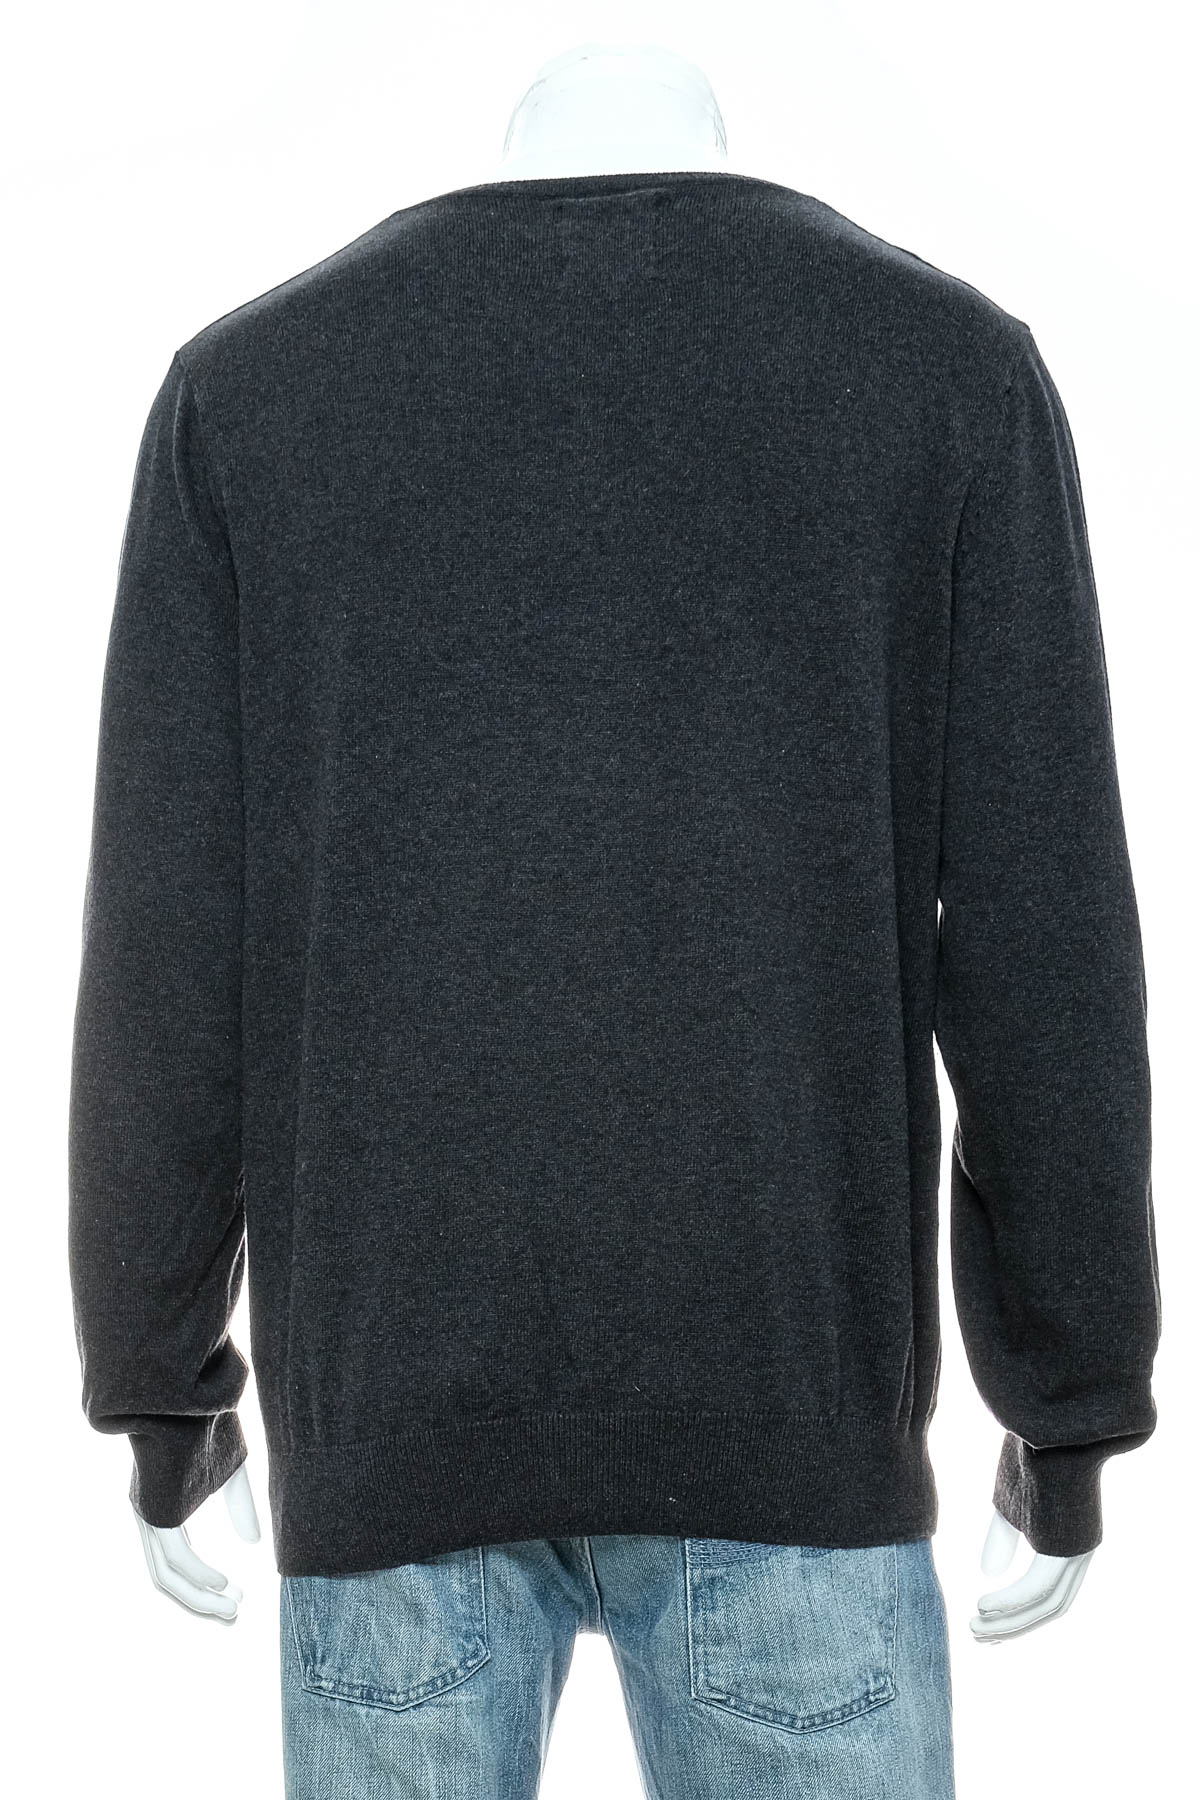 Men's sweater - Koton - 1